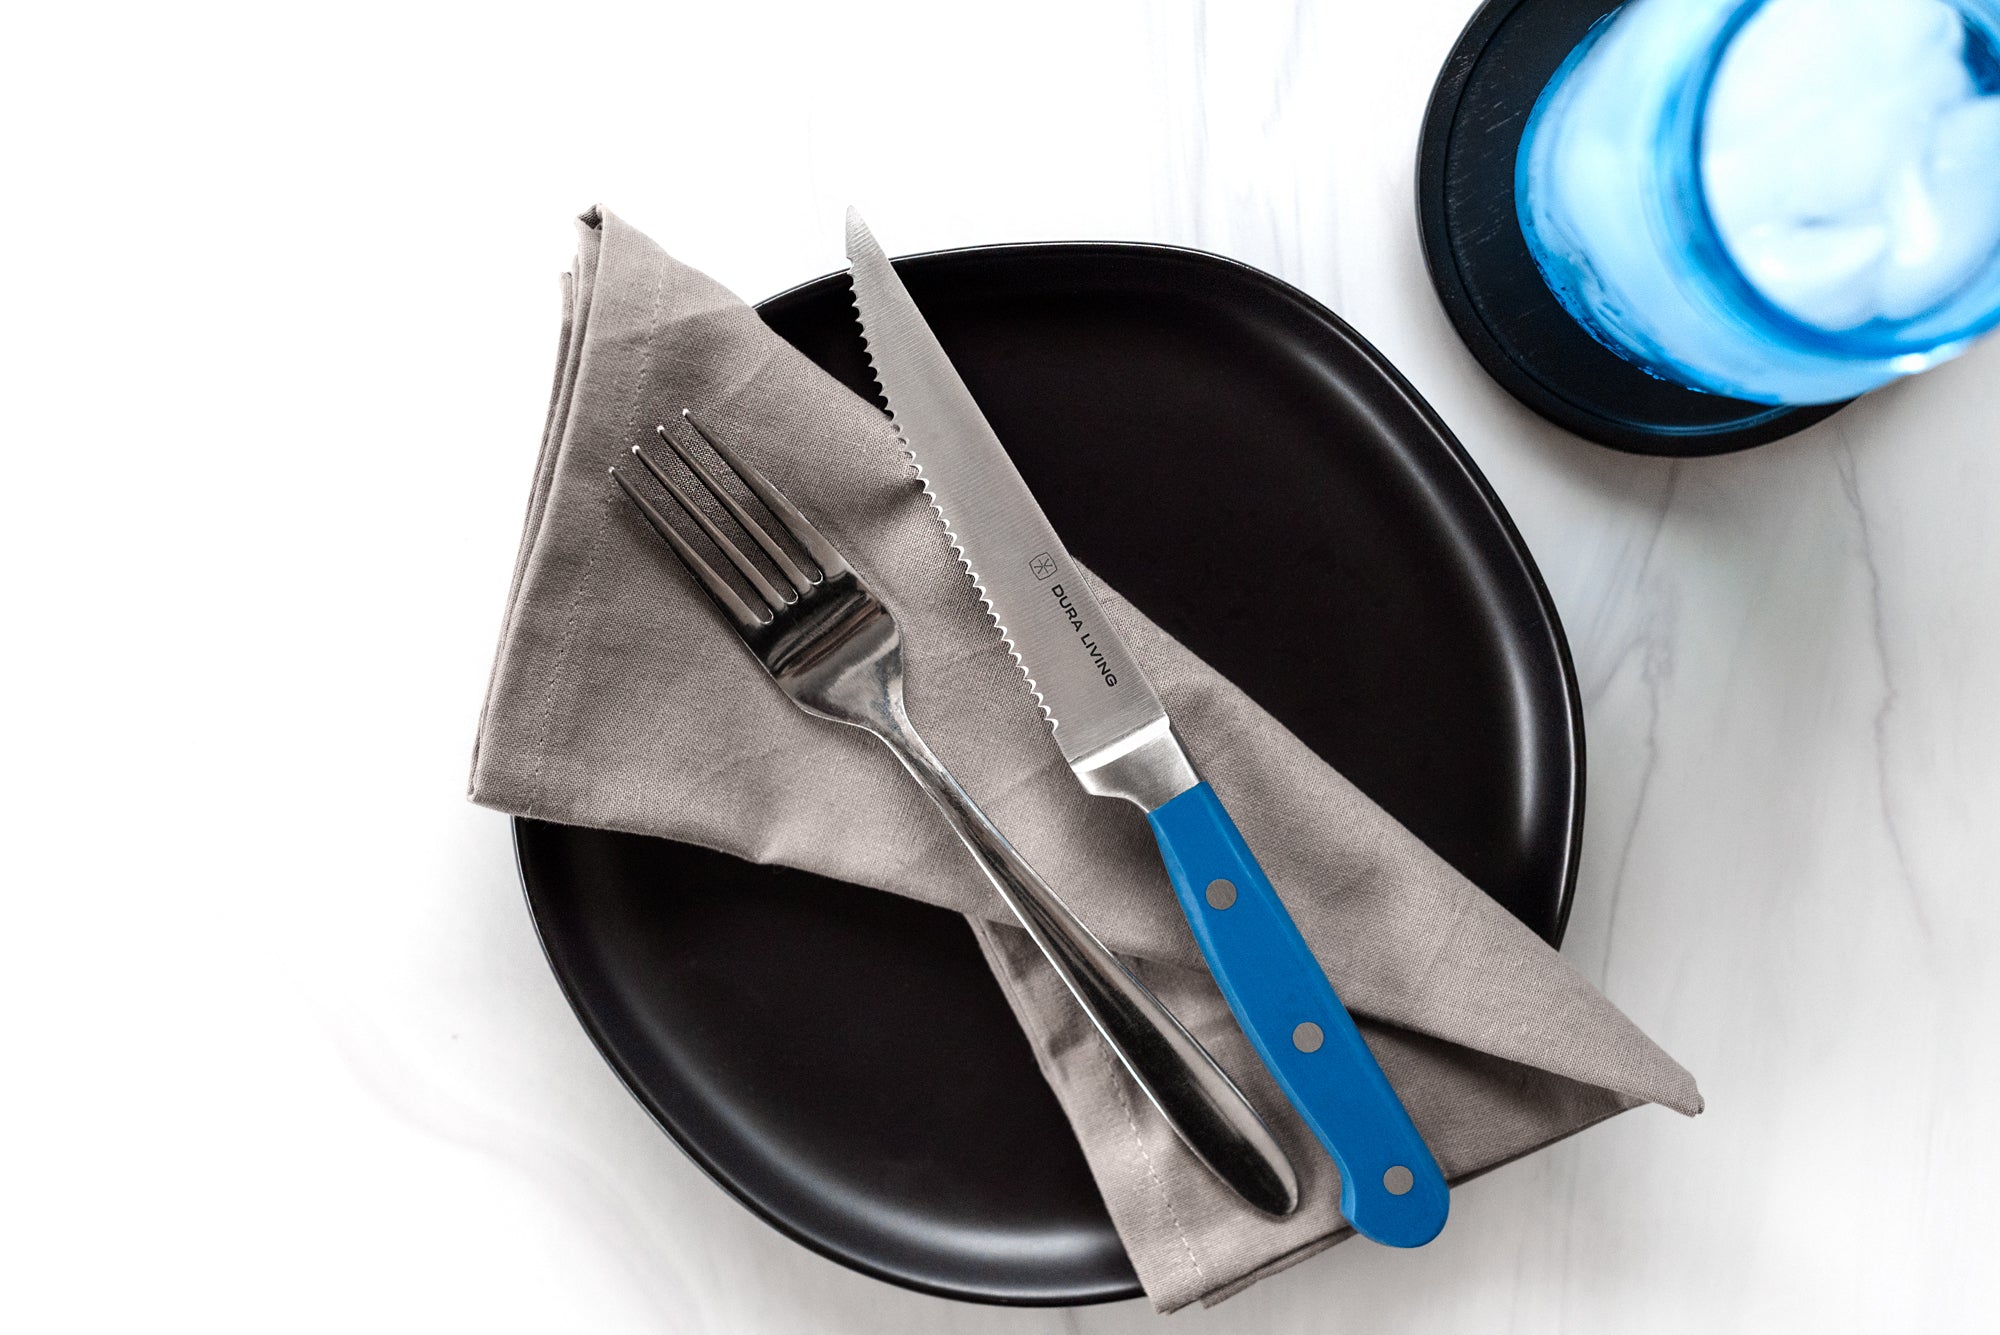 DURA LIVING Steak Knives - Serrated Steak Knife Set of 8 – Forged High  Carbon Stainless Steel – Full Tang – Ergonomic Handle Design, Grey Knife Set